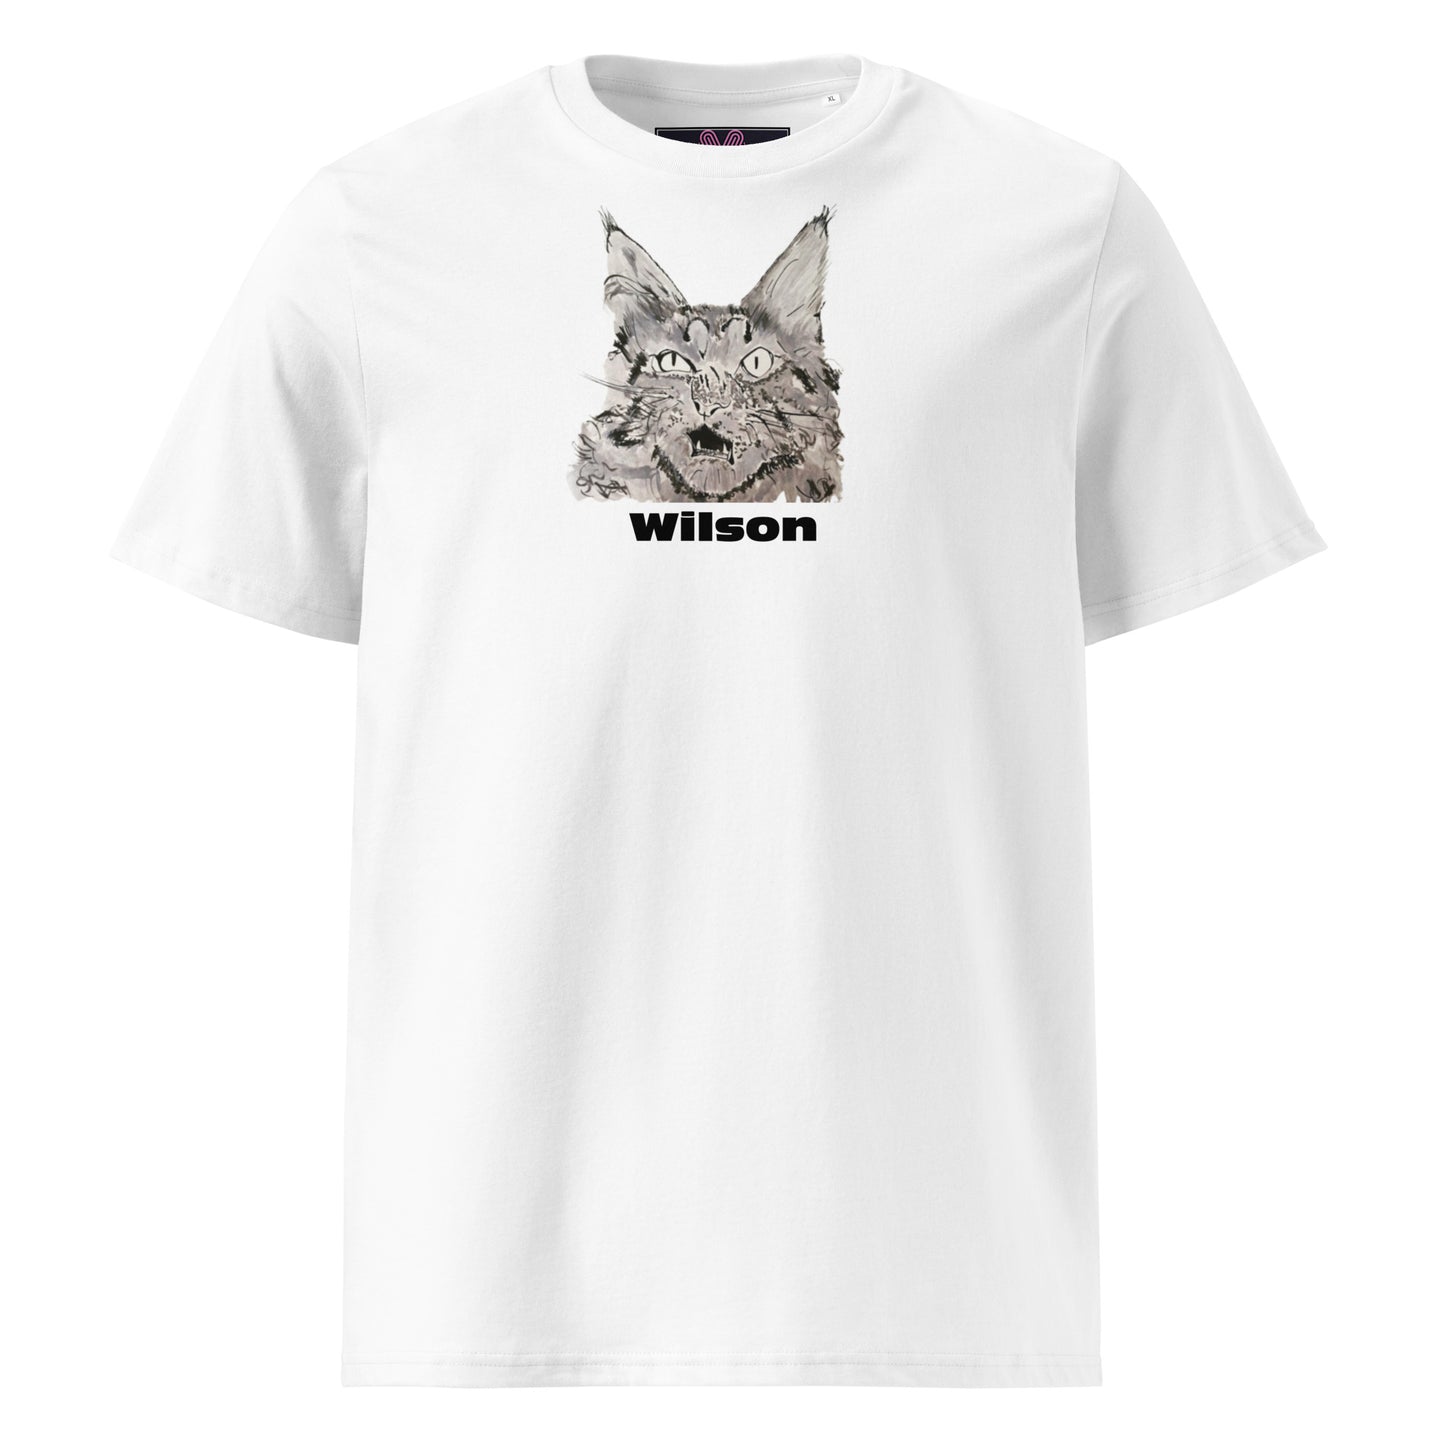 Wilson organic cotton t-shirt